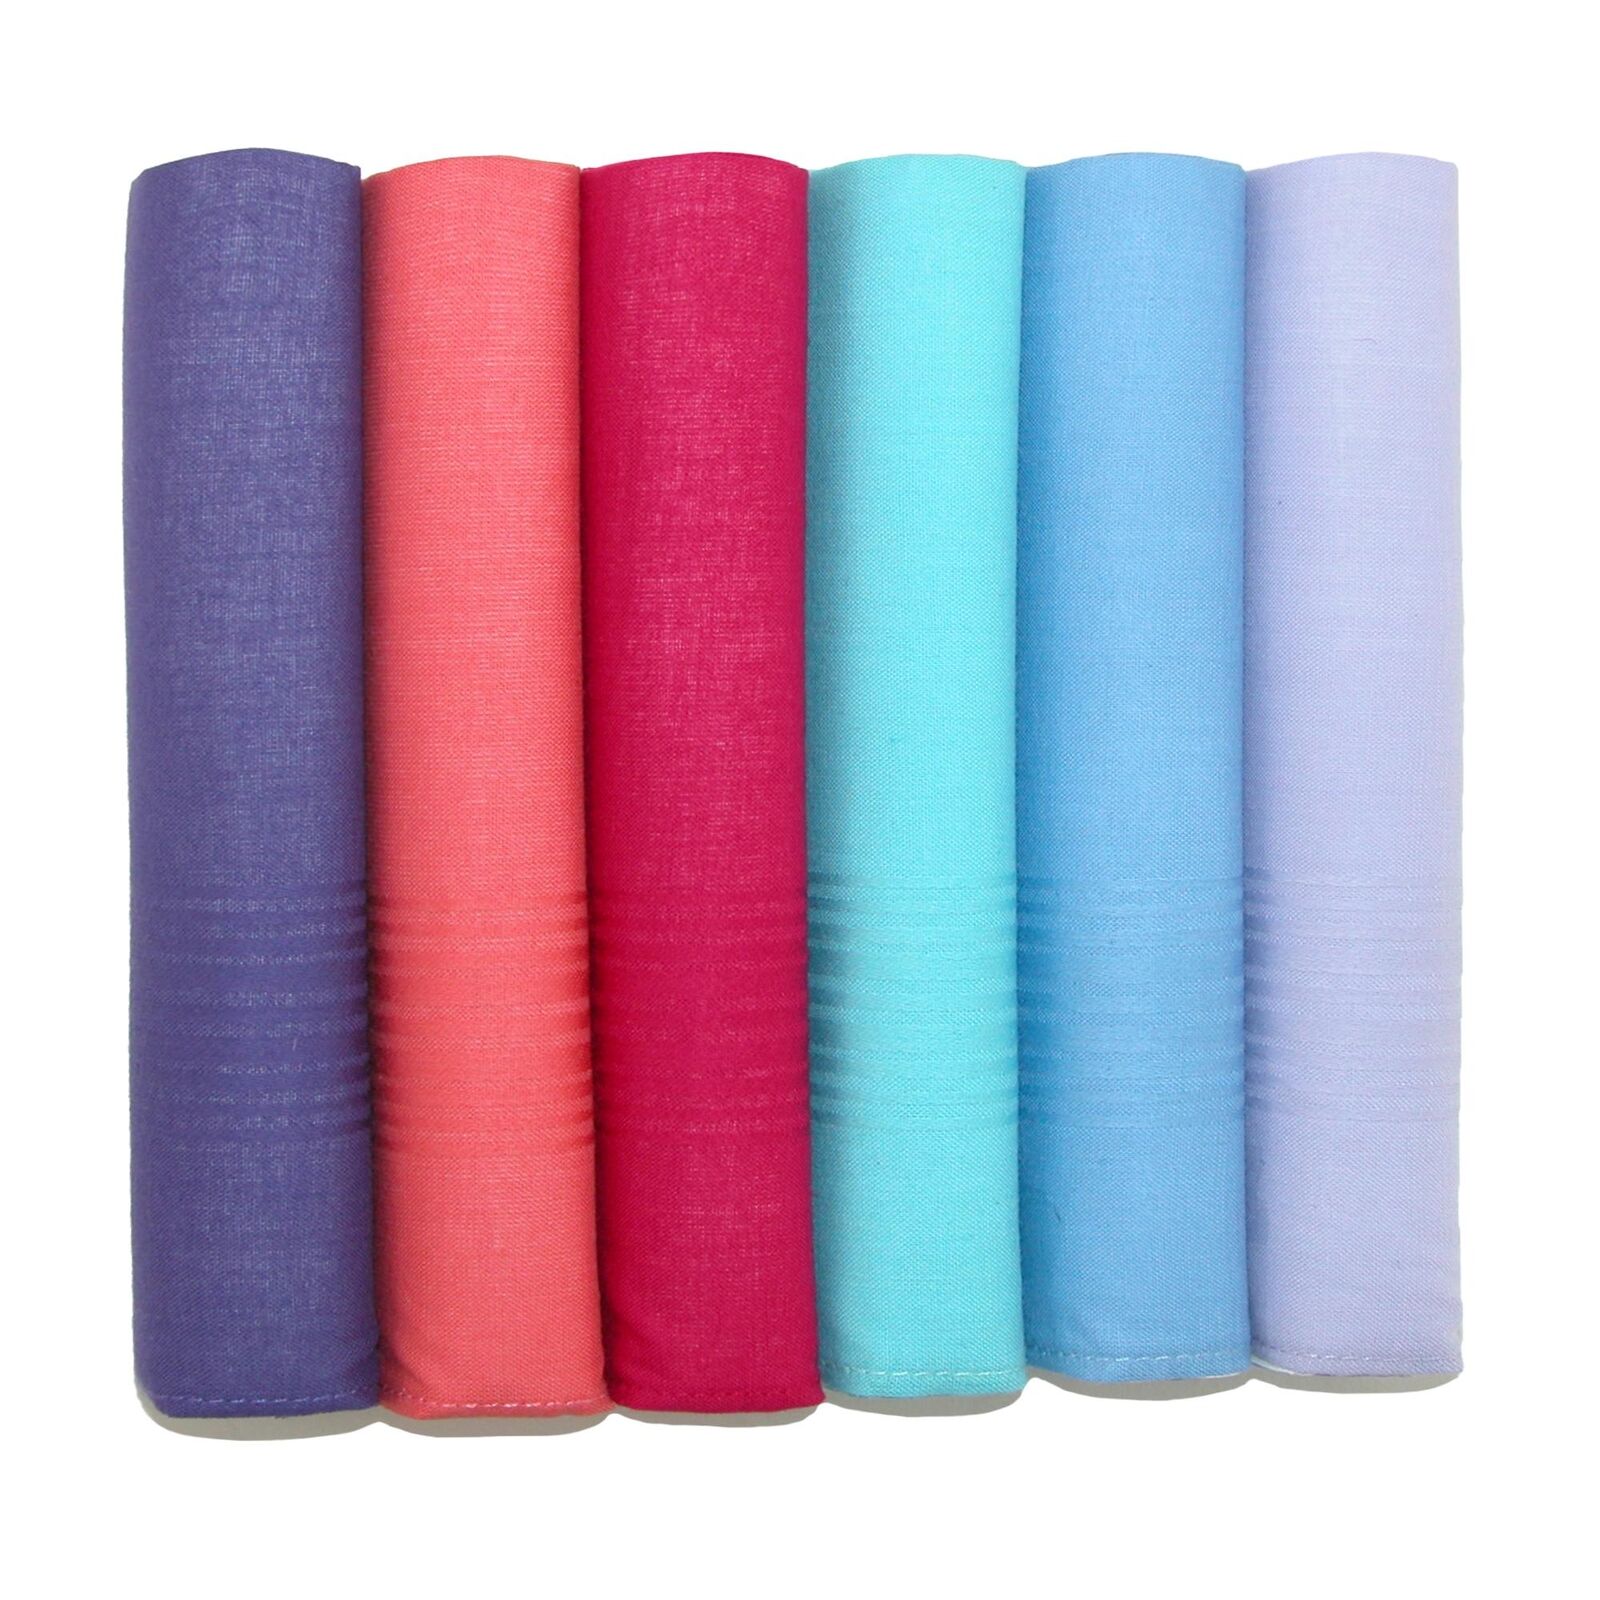 New Selini Women's Cotton Bright Multi-Color Dress Handkerchief Set (Pack of 6)